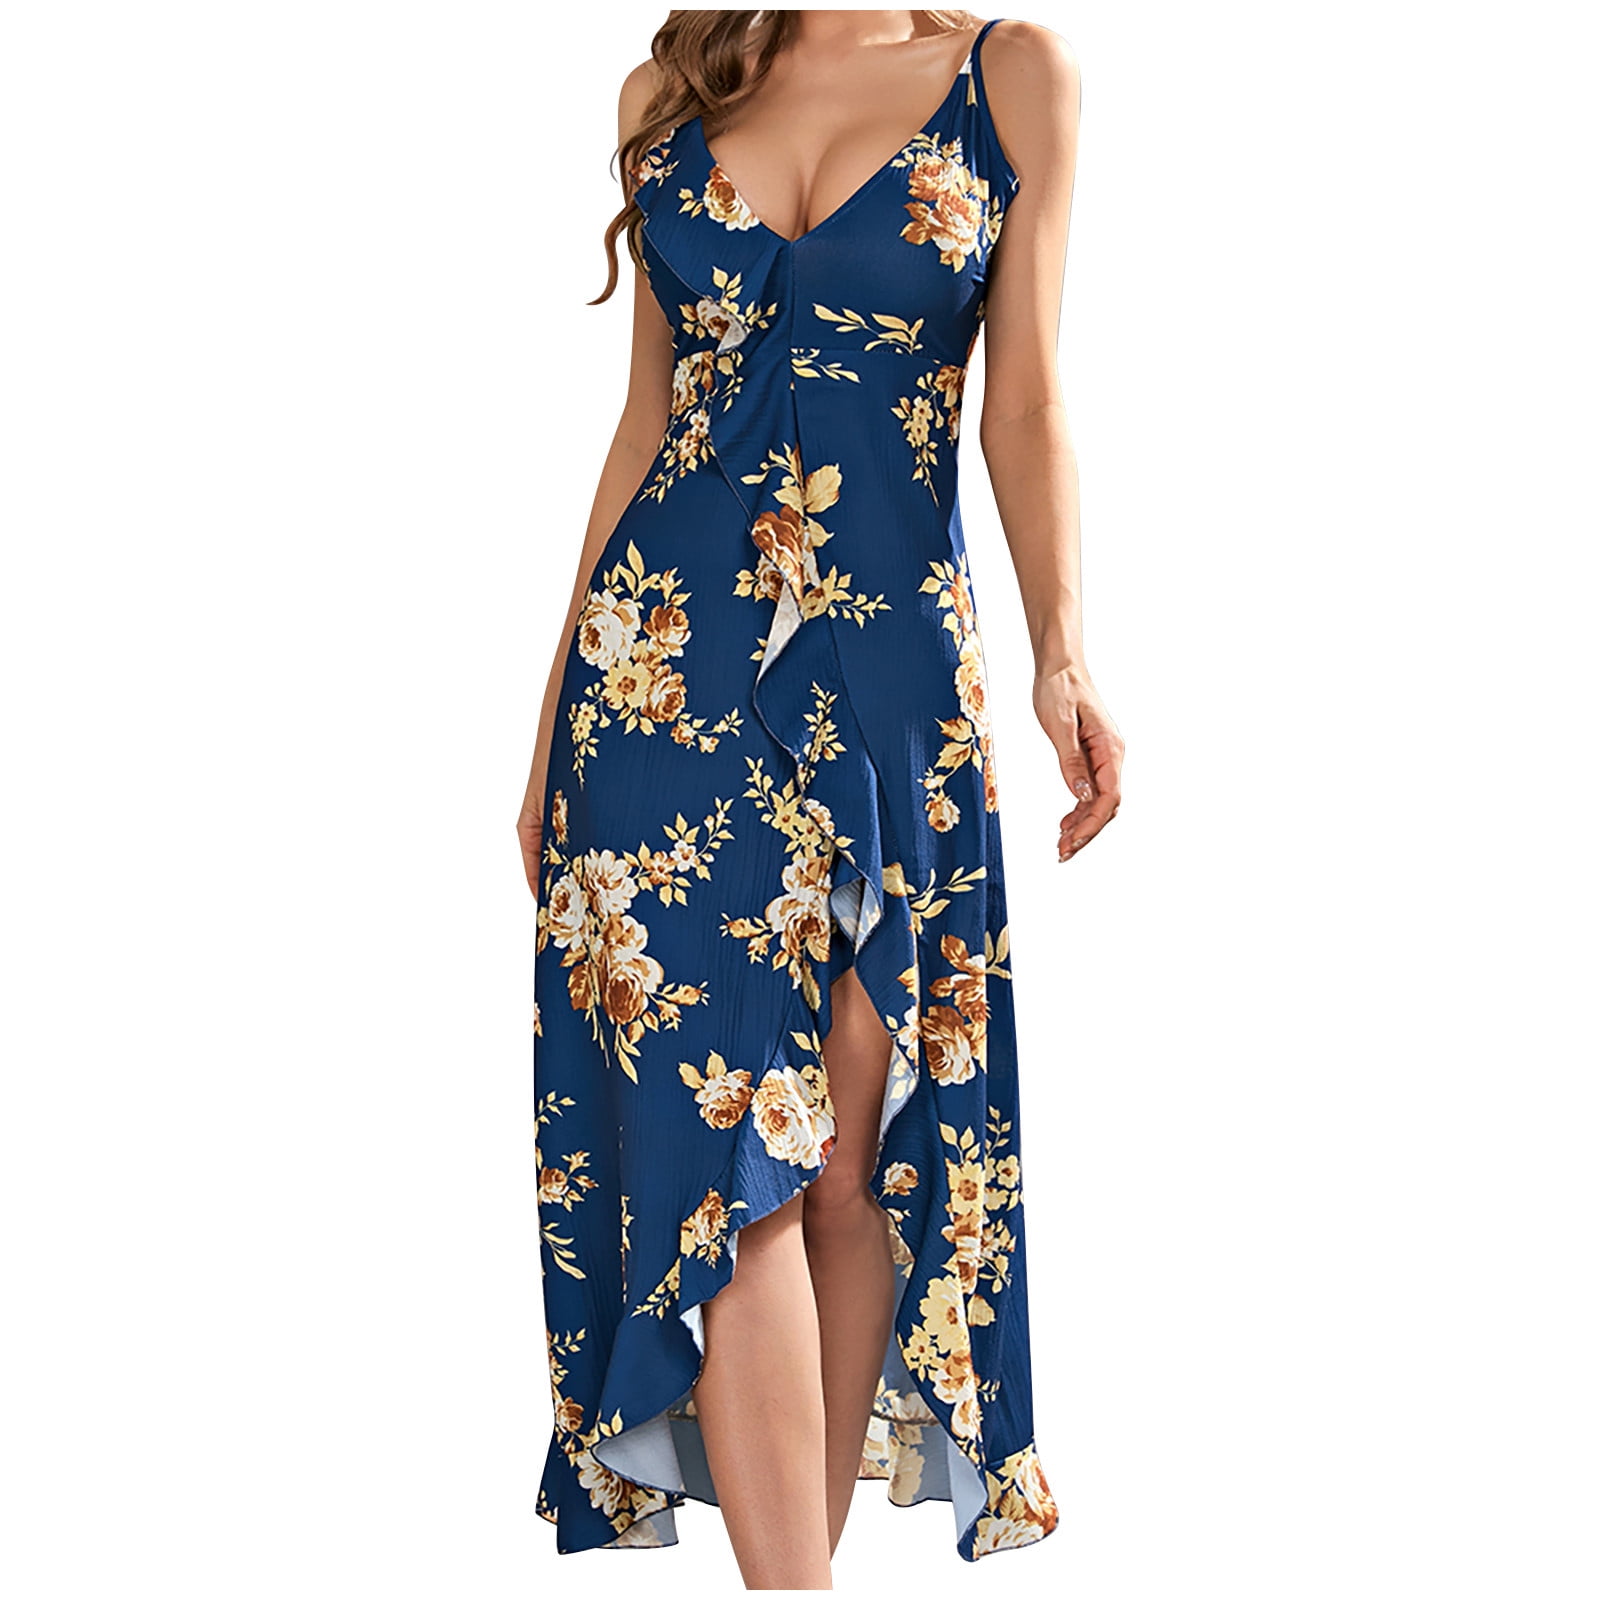 Womens Summer Floral Flowy Spaghetti Strap V-Neck Sleeveless Side Slit Irregular High Low Casual Beach Sundress Midi Dress 